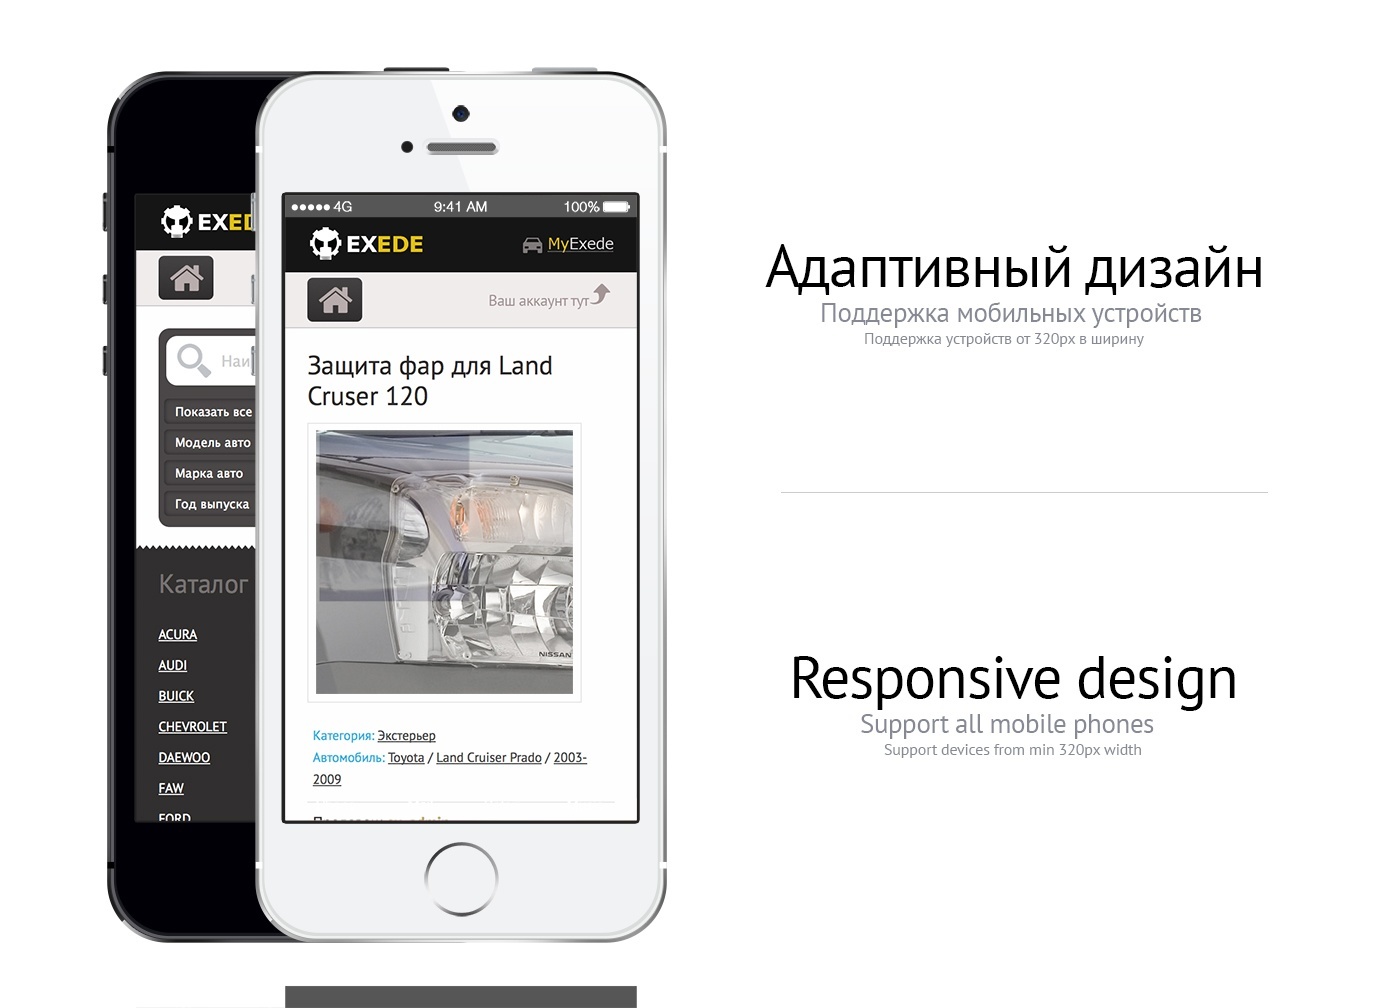 EXEDE №9- Responsive design - mobile phones